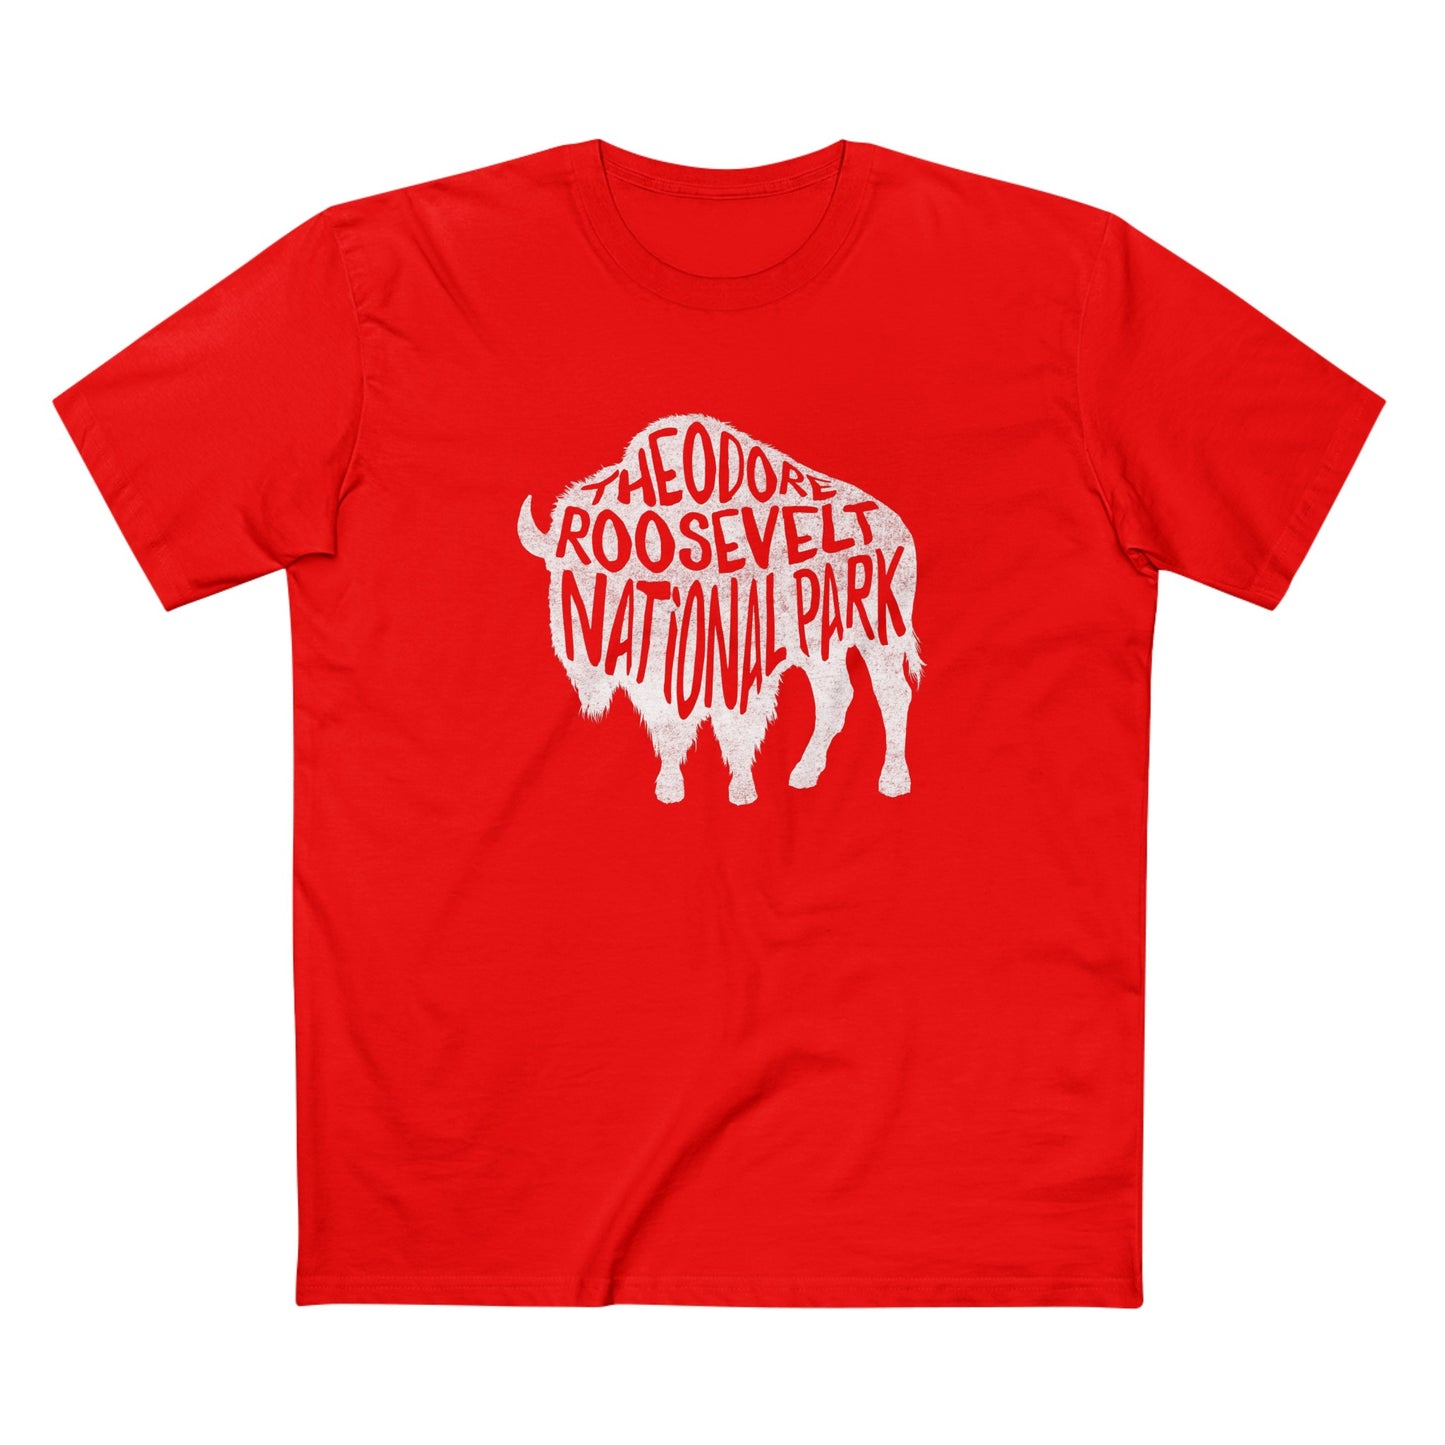 Theodore Roosevelt National Park T-Shirt - Bison